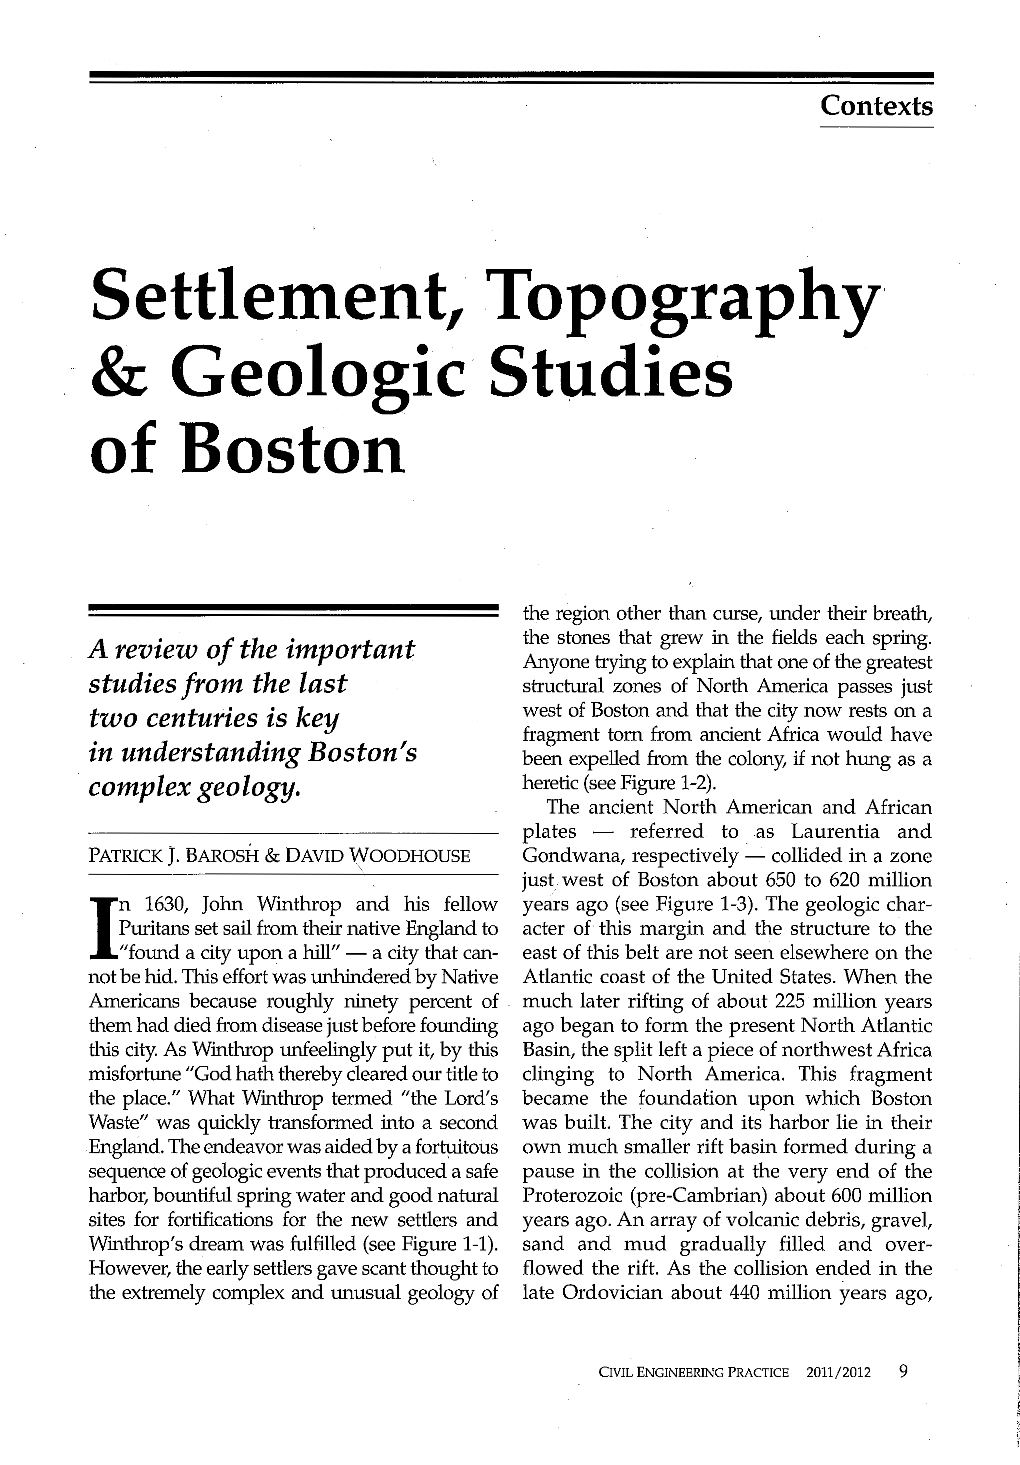 Settlement, Topography & Geologic Studies of Boston